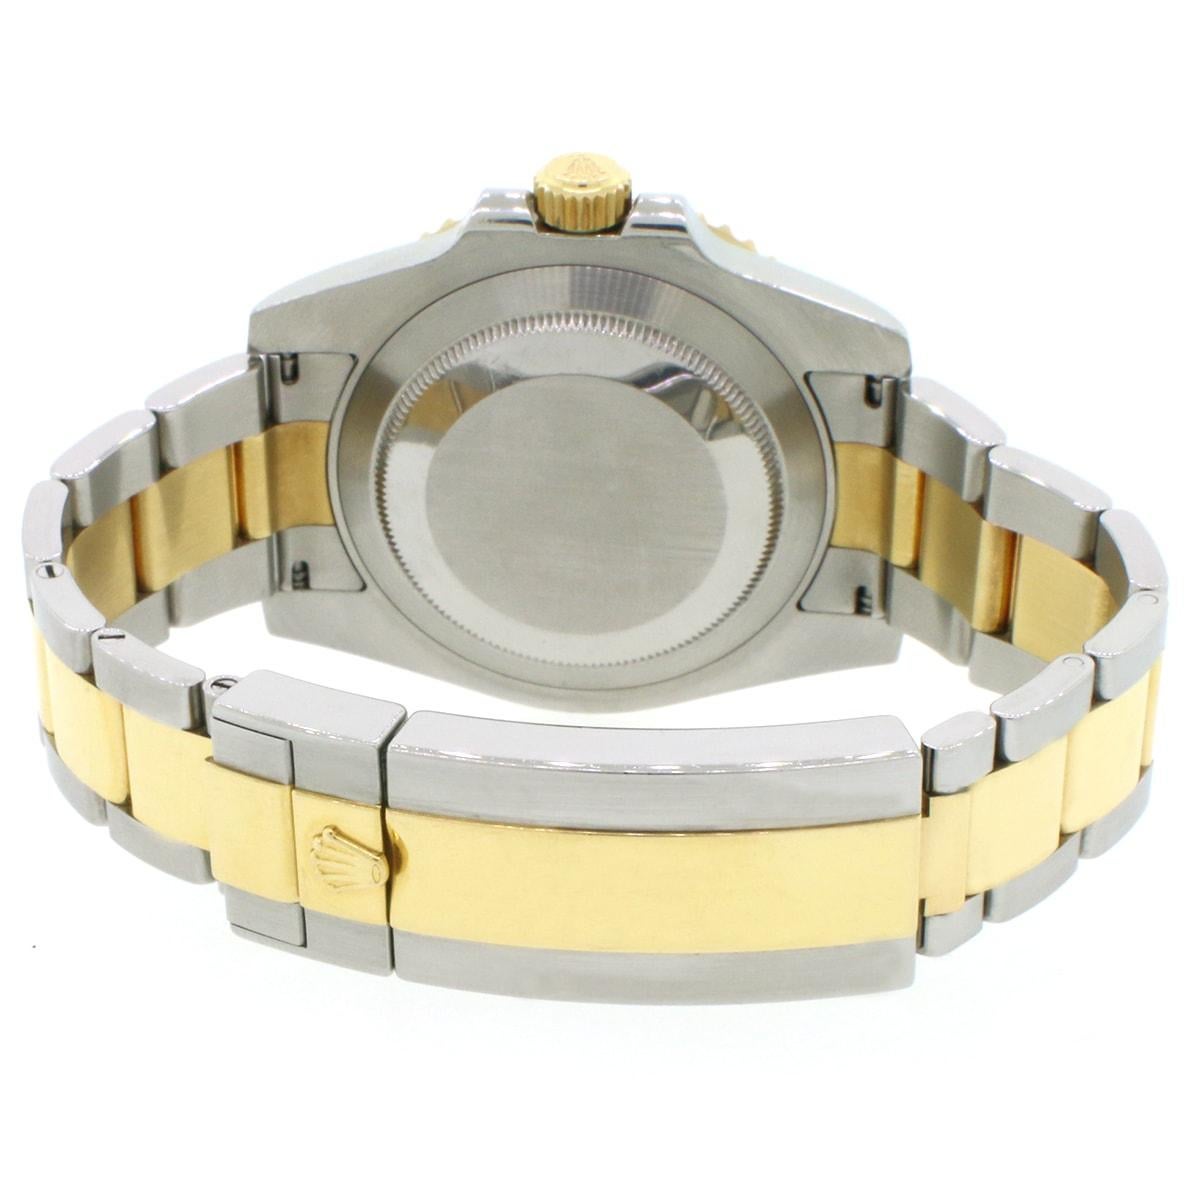 Rolex Submariner Gold/Steel Ceramic Bezel Black Dial Watch 116613 For Sale 1